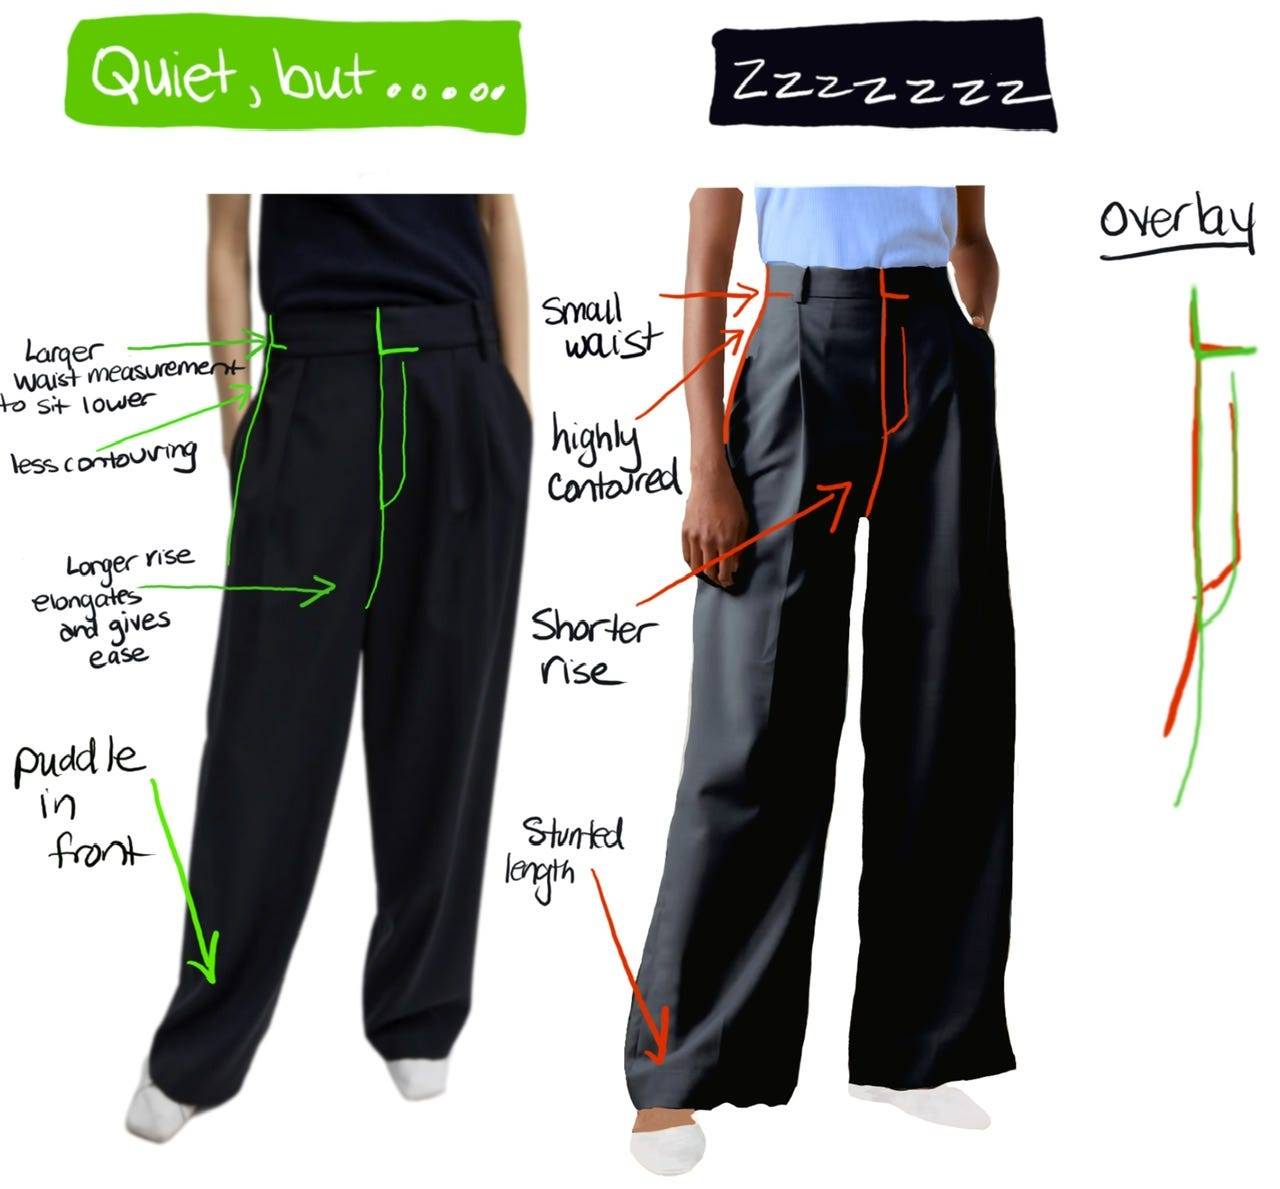 photo collage of tibi pants vs generic pants